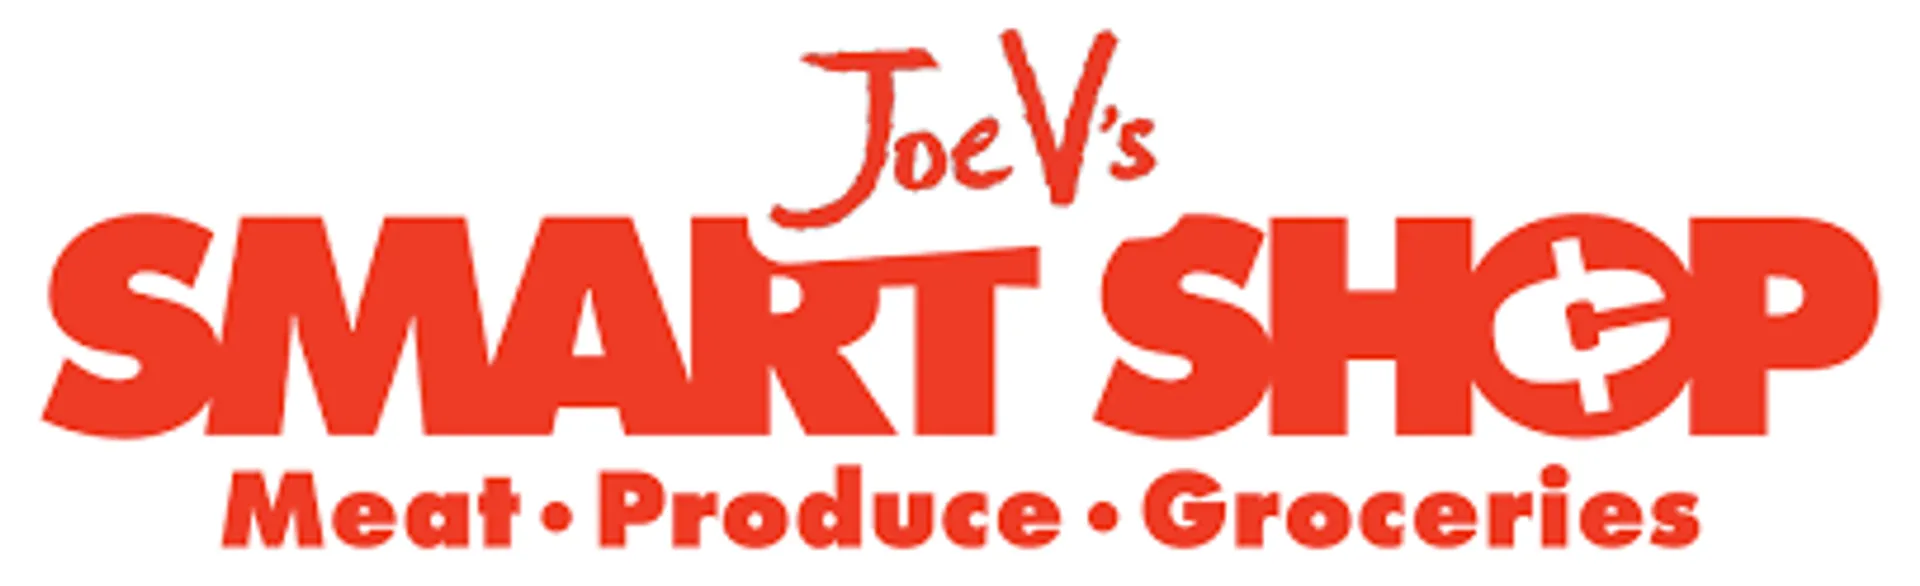 JOE V'S SMART SHOP logo current weekly ad